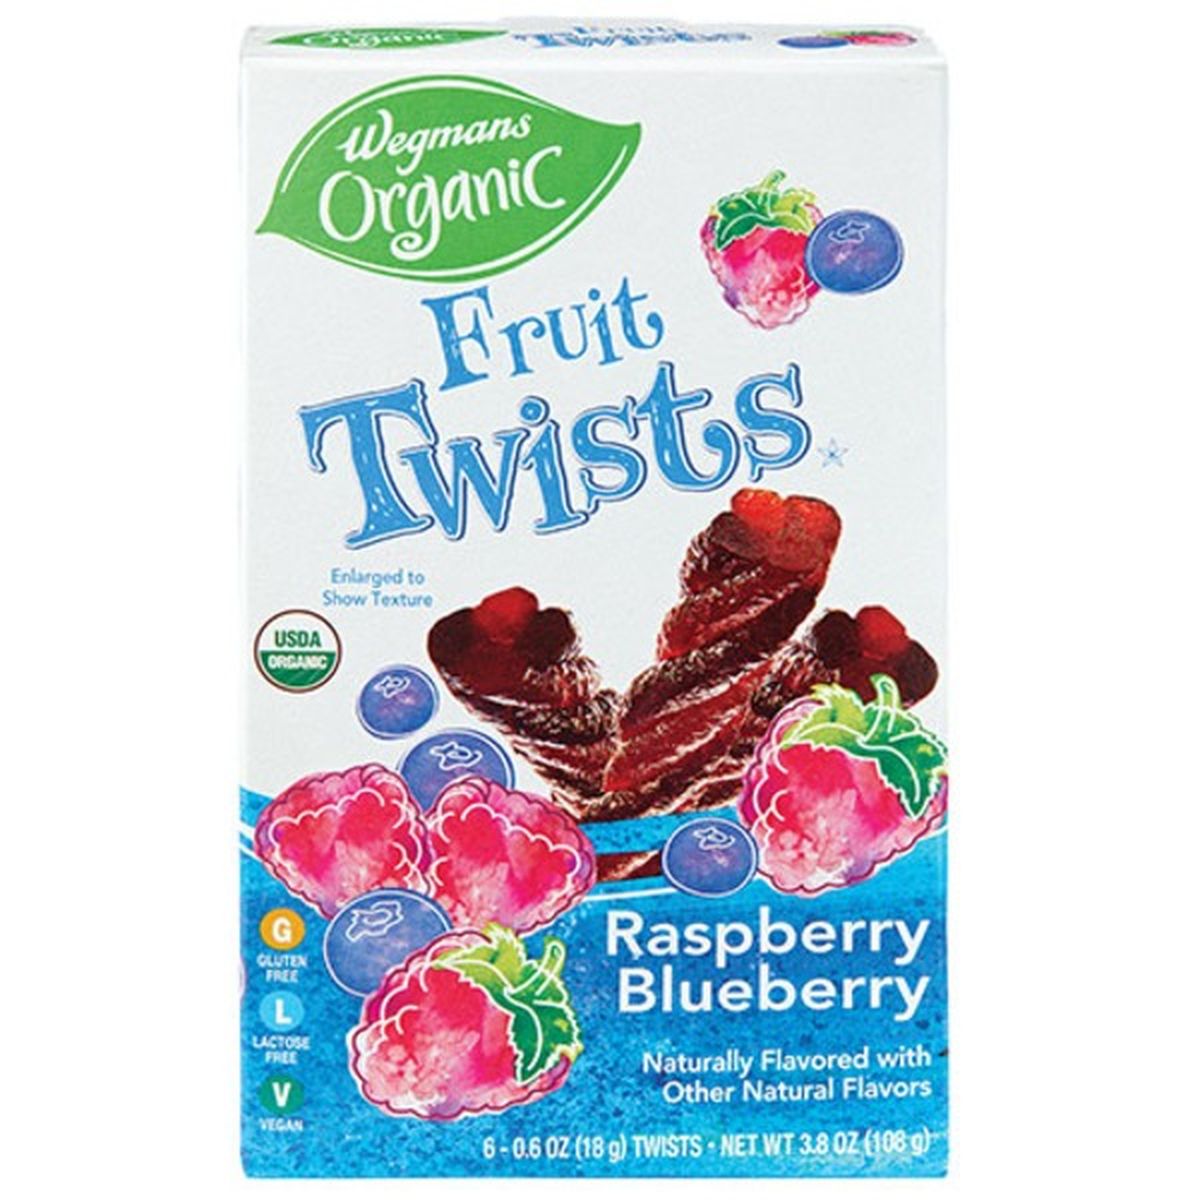 Calories in Wegmans Organic Fruit Twists, Raspberry Blueberry